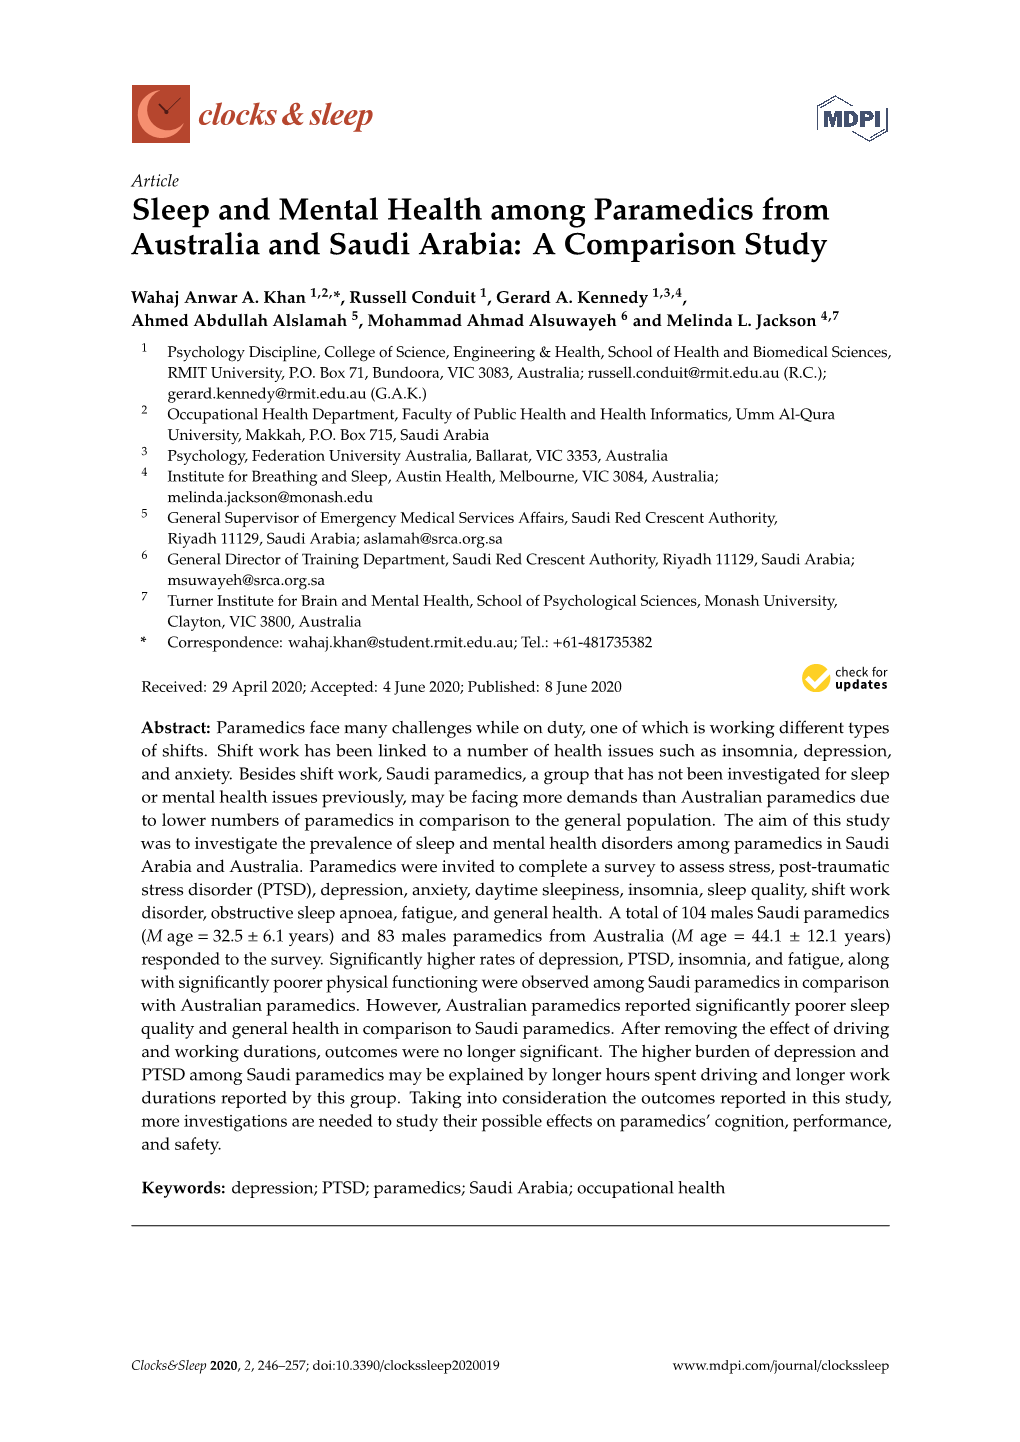 Sleep and Mental Health Among Paramedics from Australia and Saudi Arabia: a Comparison Study